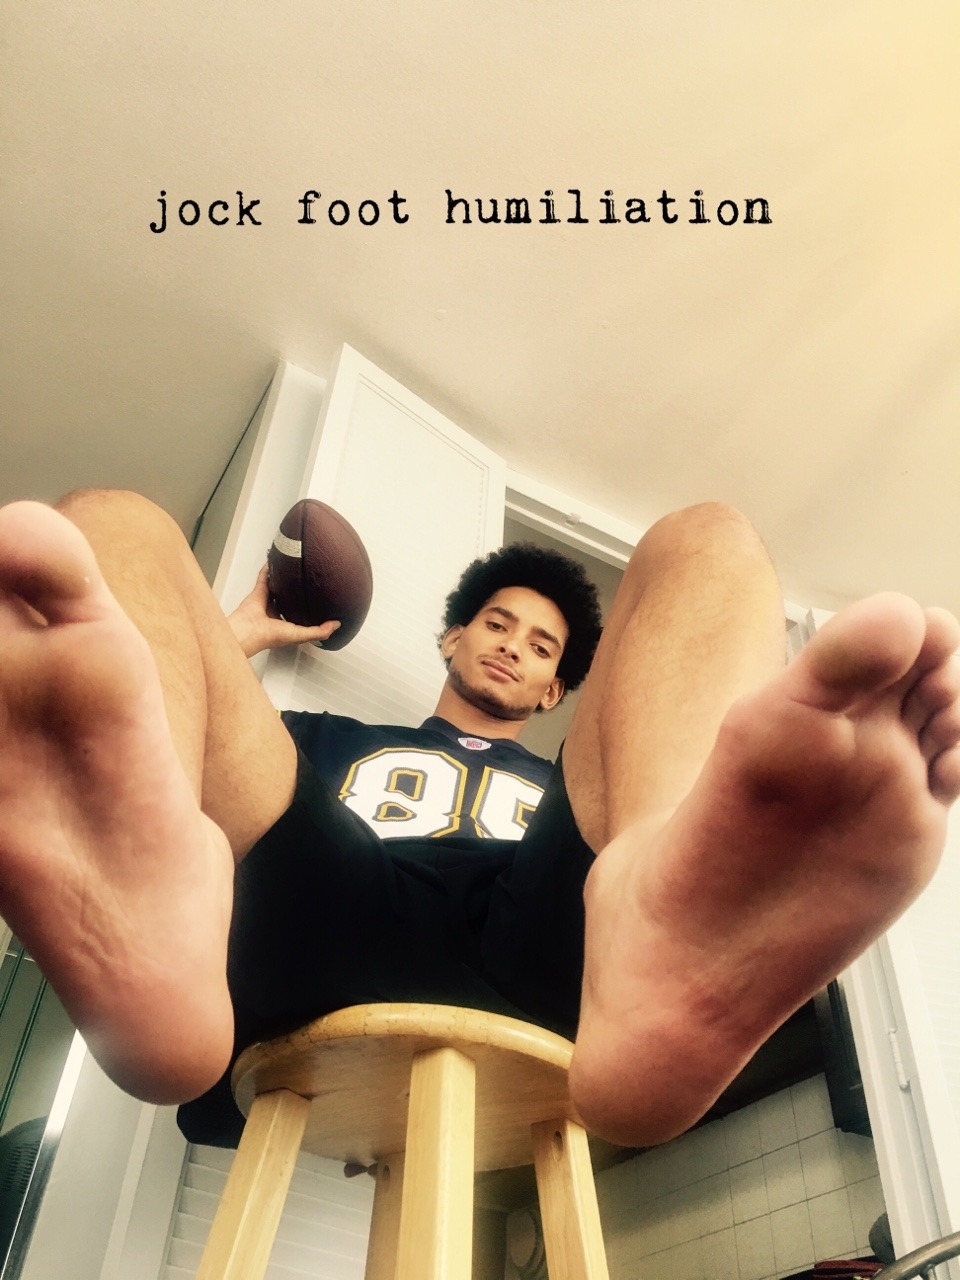 Jockfoothumiliation